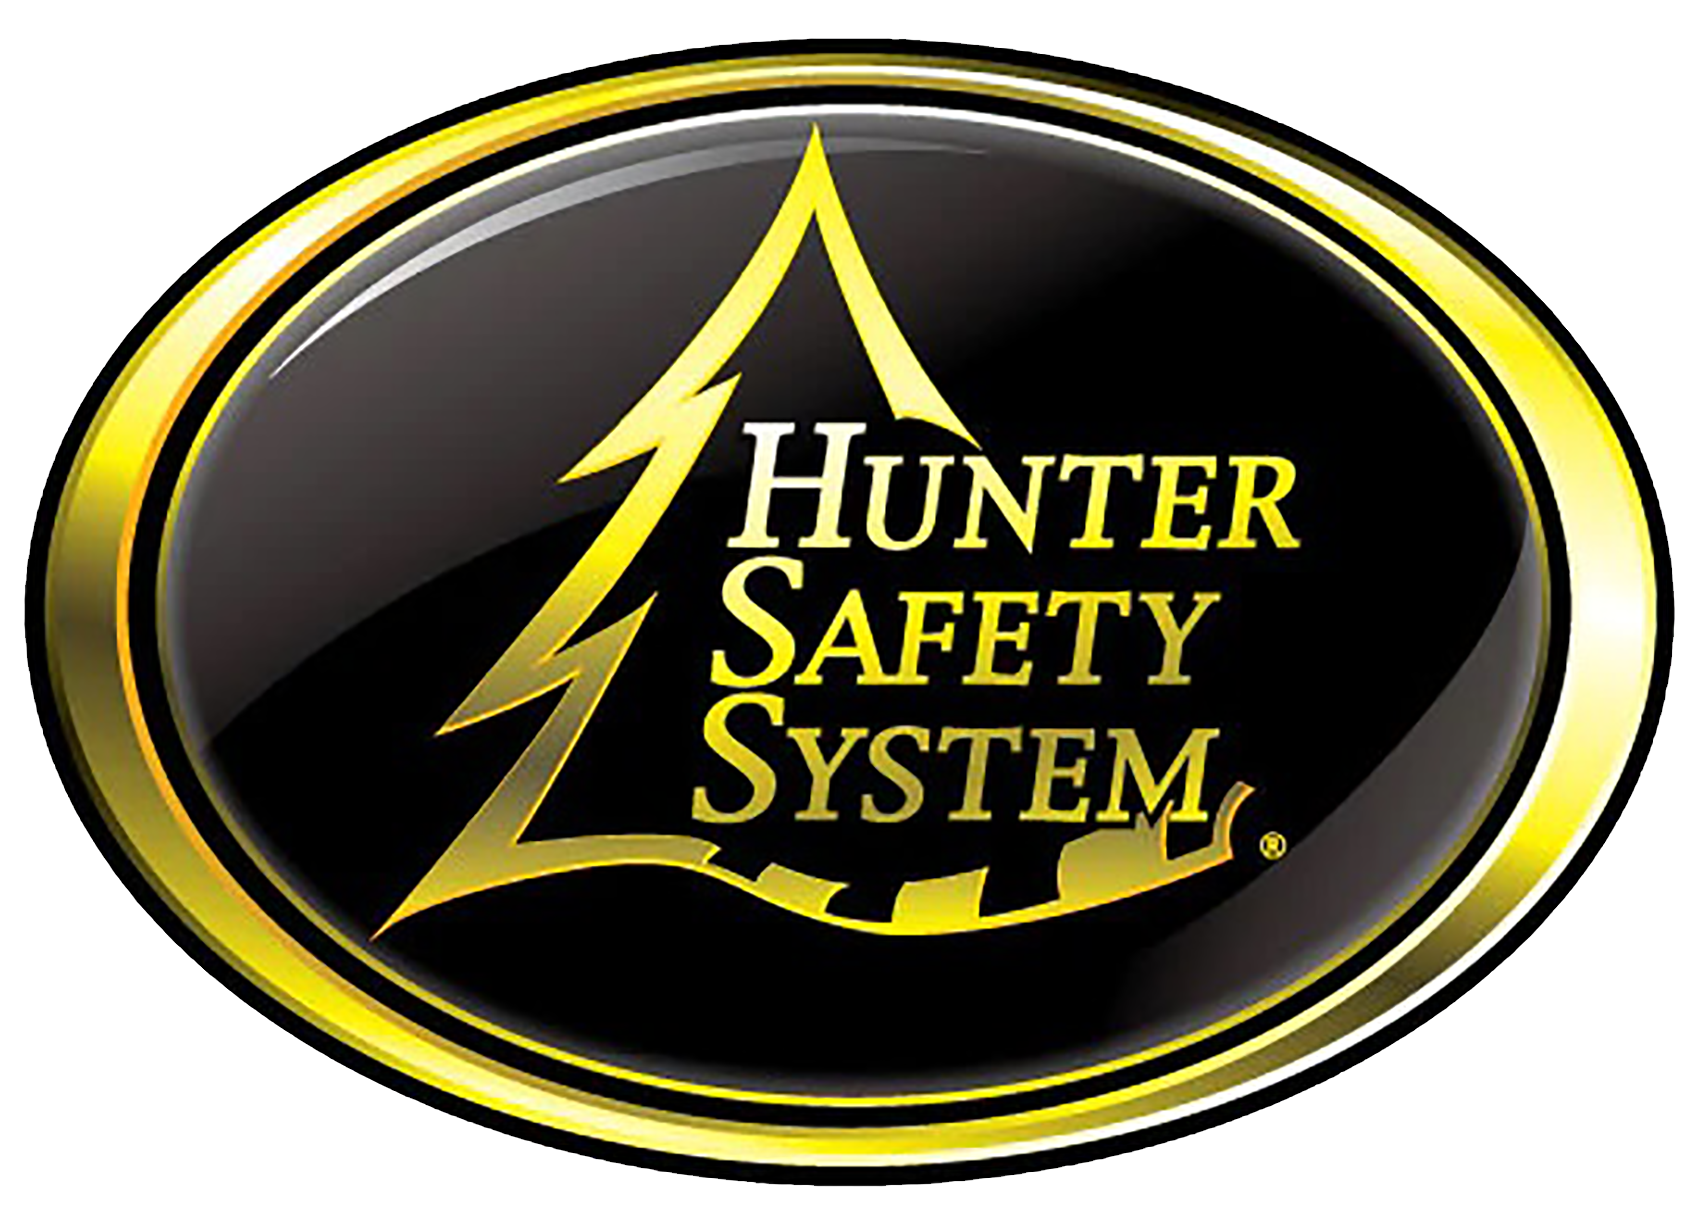 HUNTER SAFETY SYSTEM